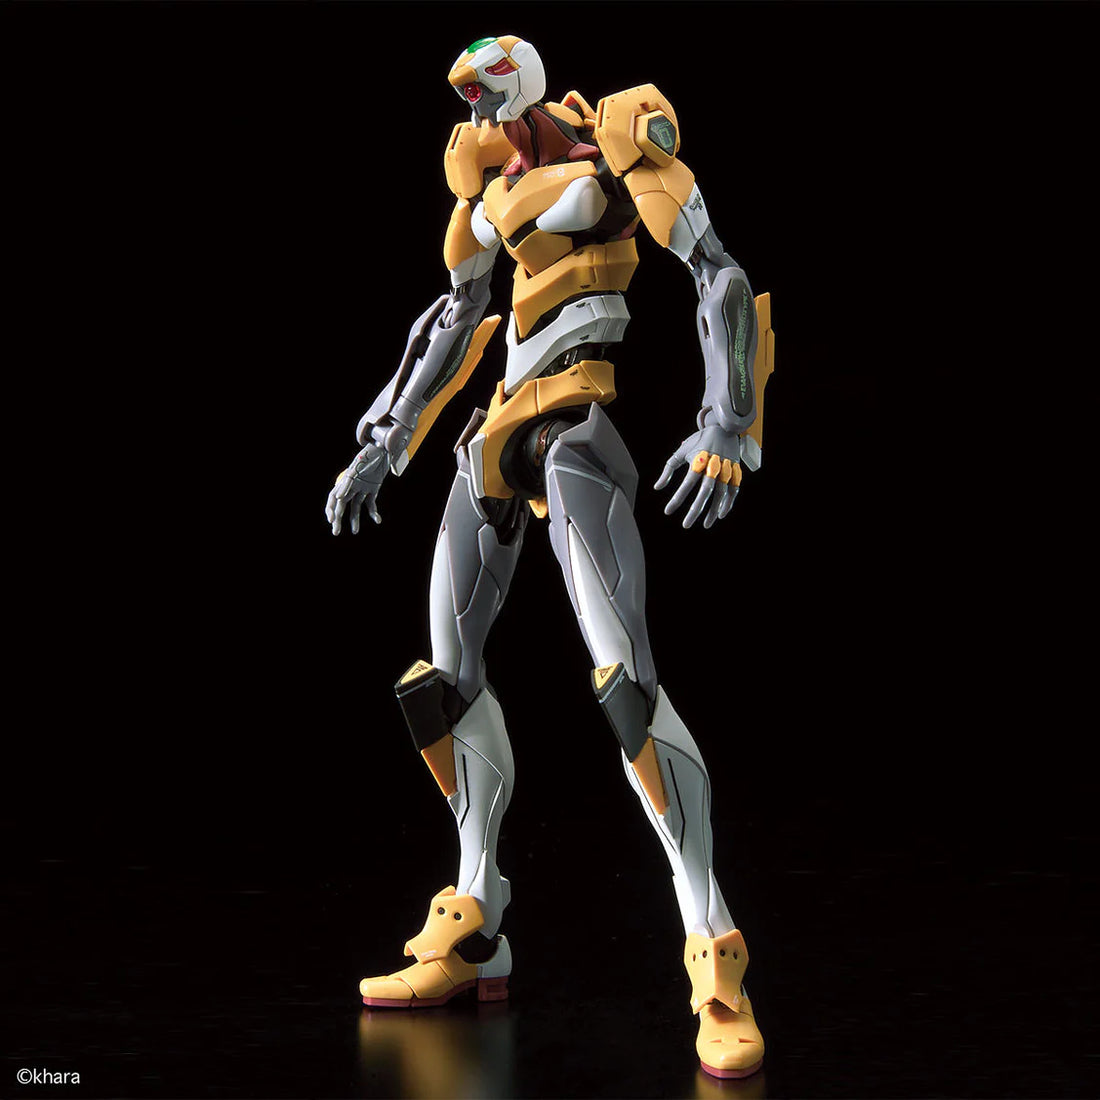 RG ARTIFICIAL Human Evangelion Unit-00 DX Positron Cannon Set - Gundam Extra-Your BEST Gunpla Supplier